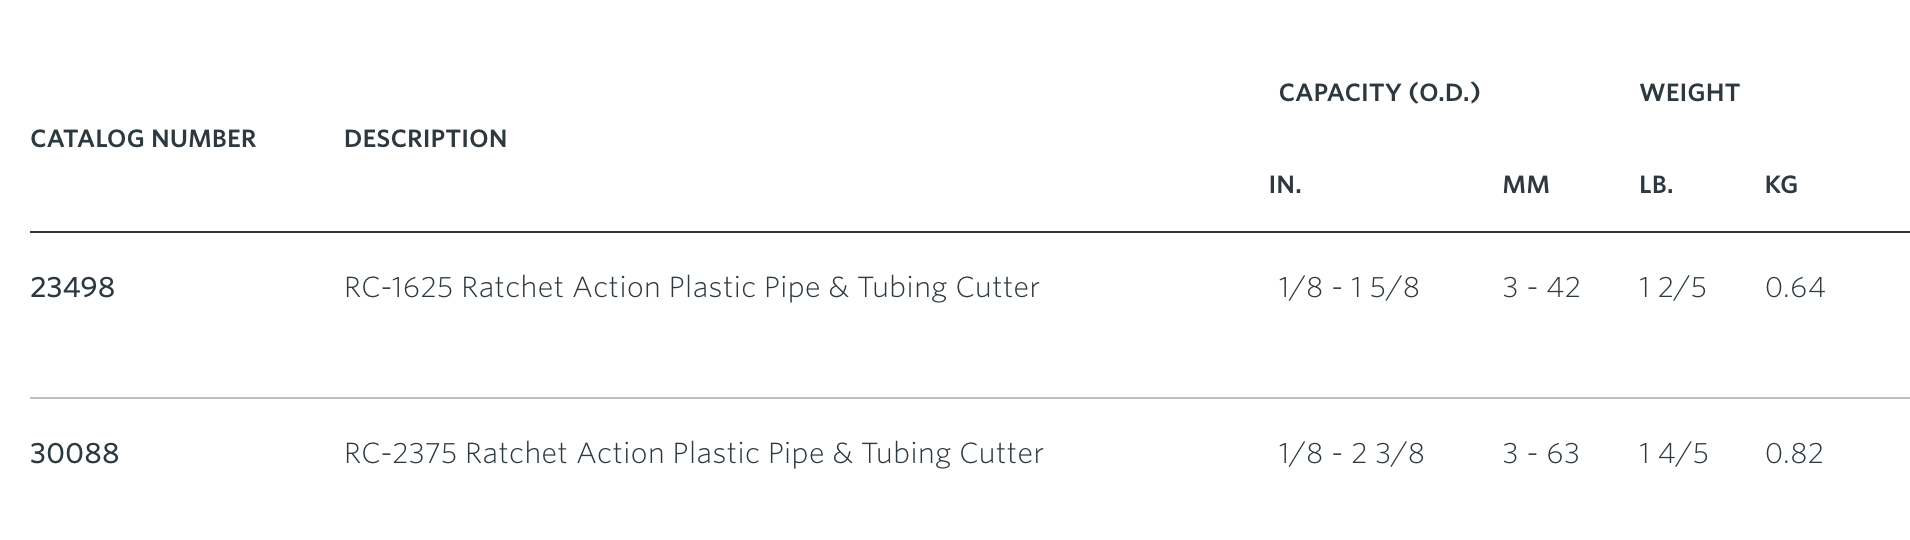 Ridgid Plastic Pipe Tubing Cutter